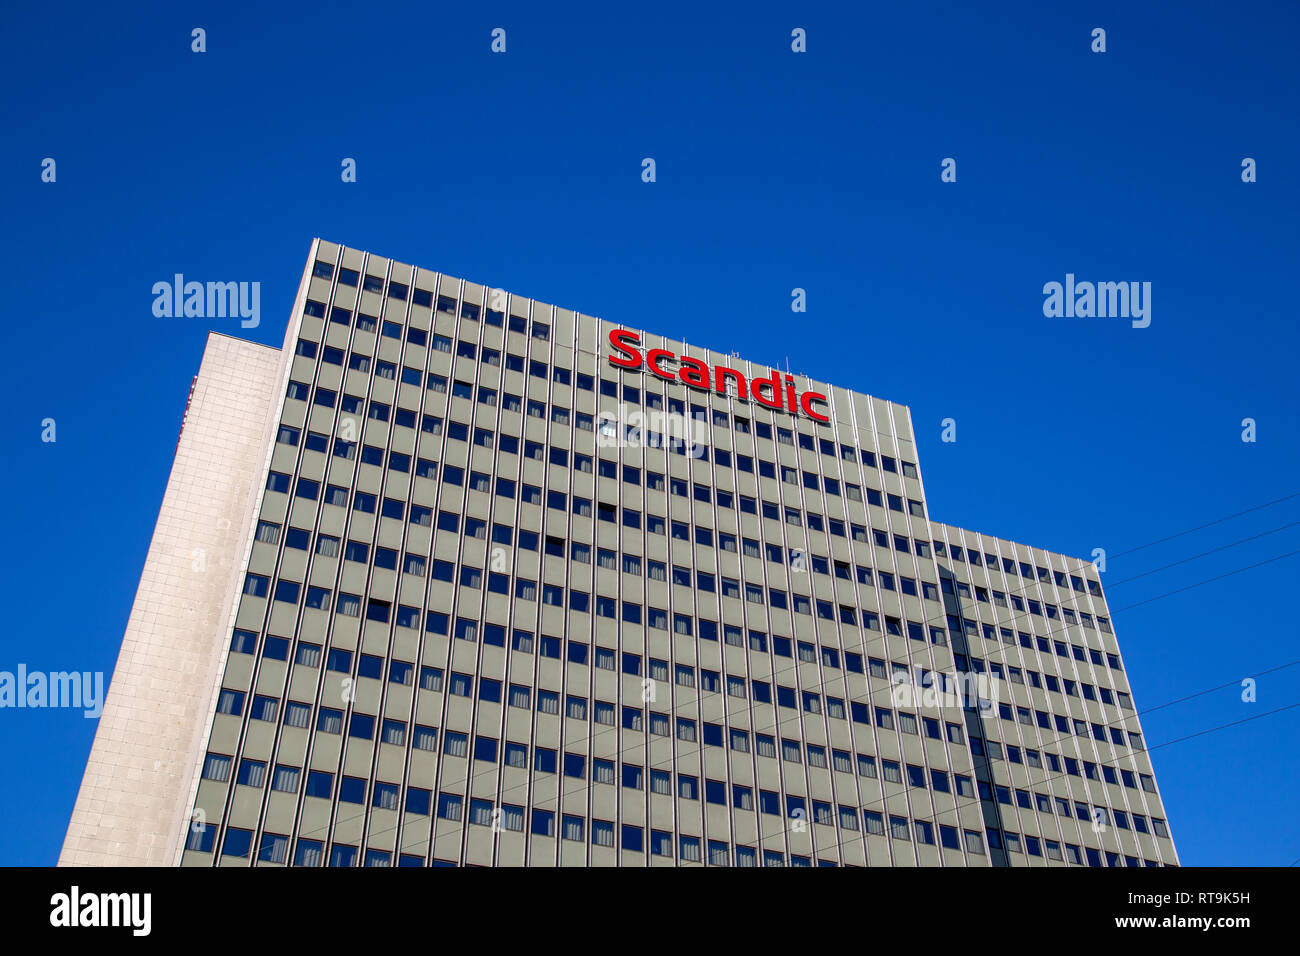 Scandic Hotel in Copenhagen, Denmark Stock Photo